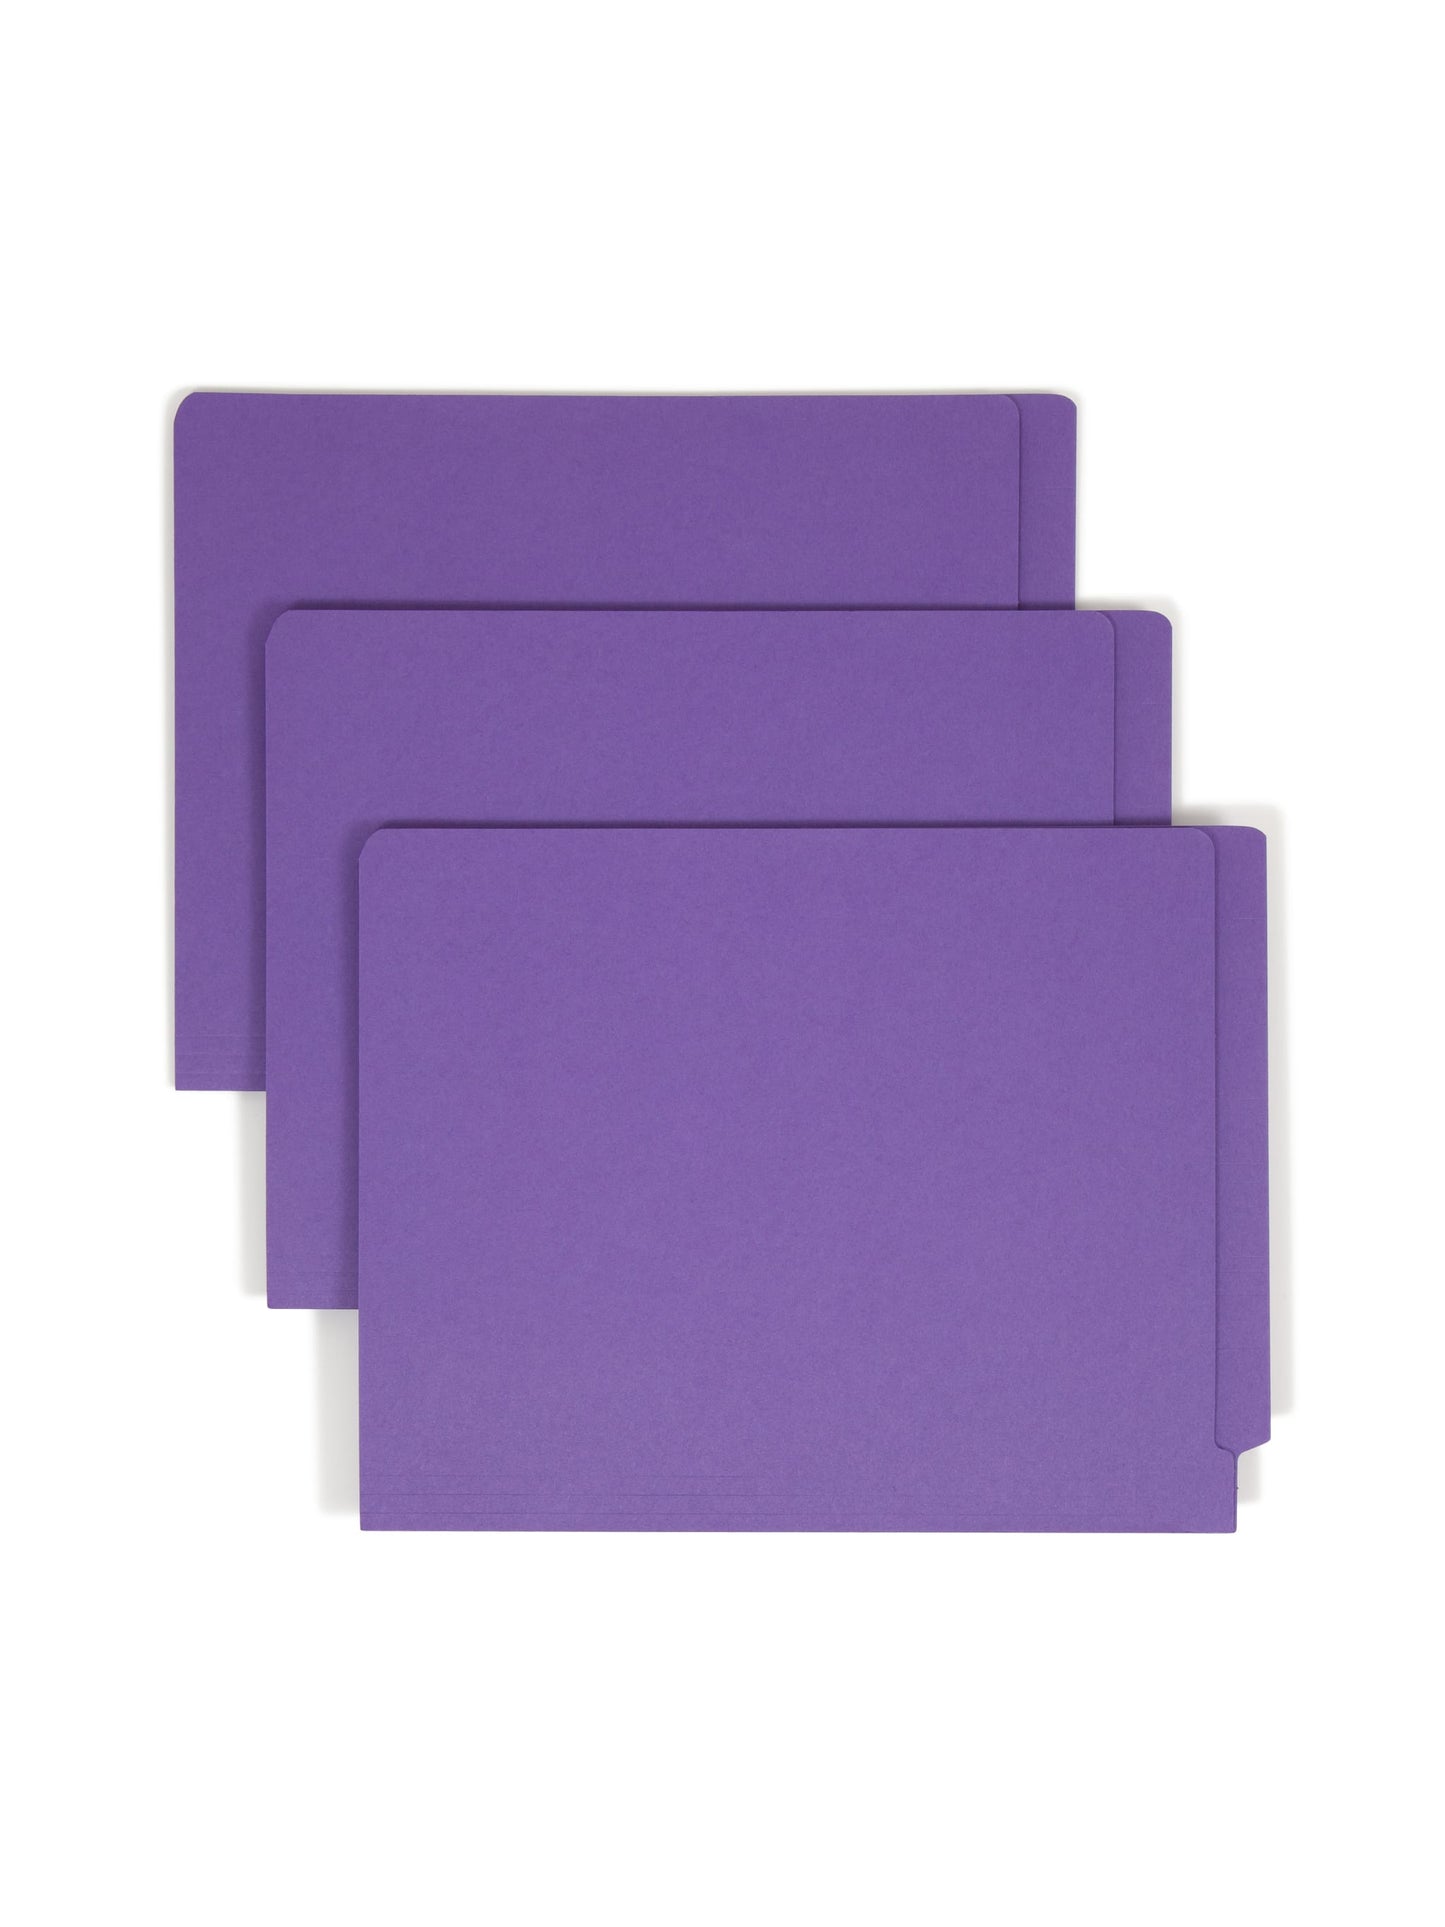 Shelf-Master® Reinforced End Tab Fastener File Folders, Straight-Cut Tab, Purple Color, Letter Size, Set of 50, 086486254403